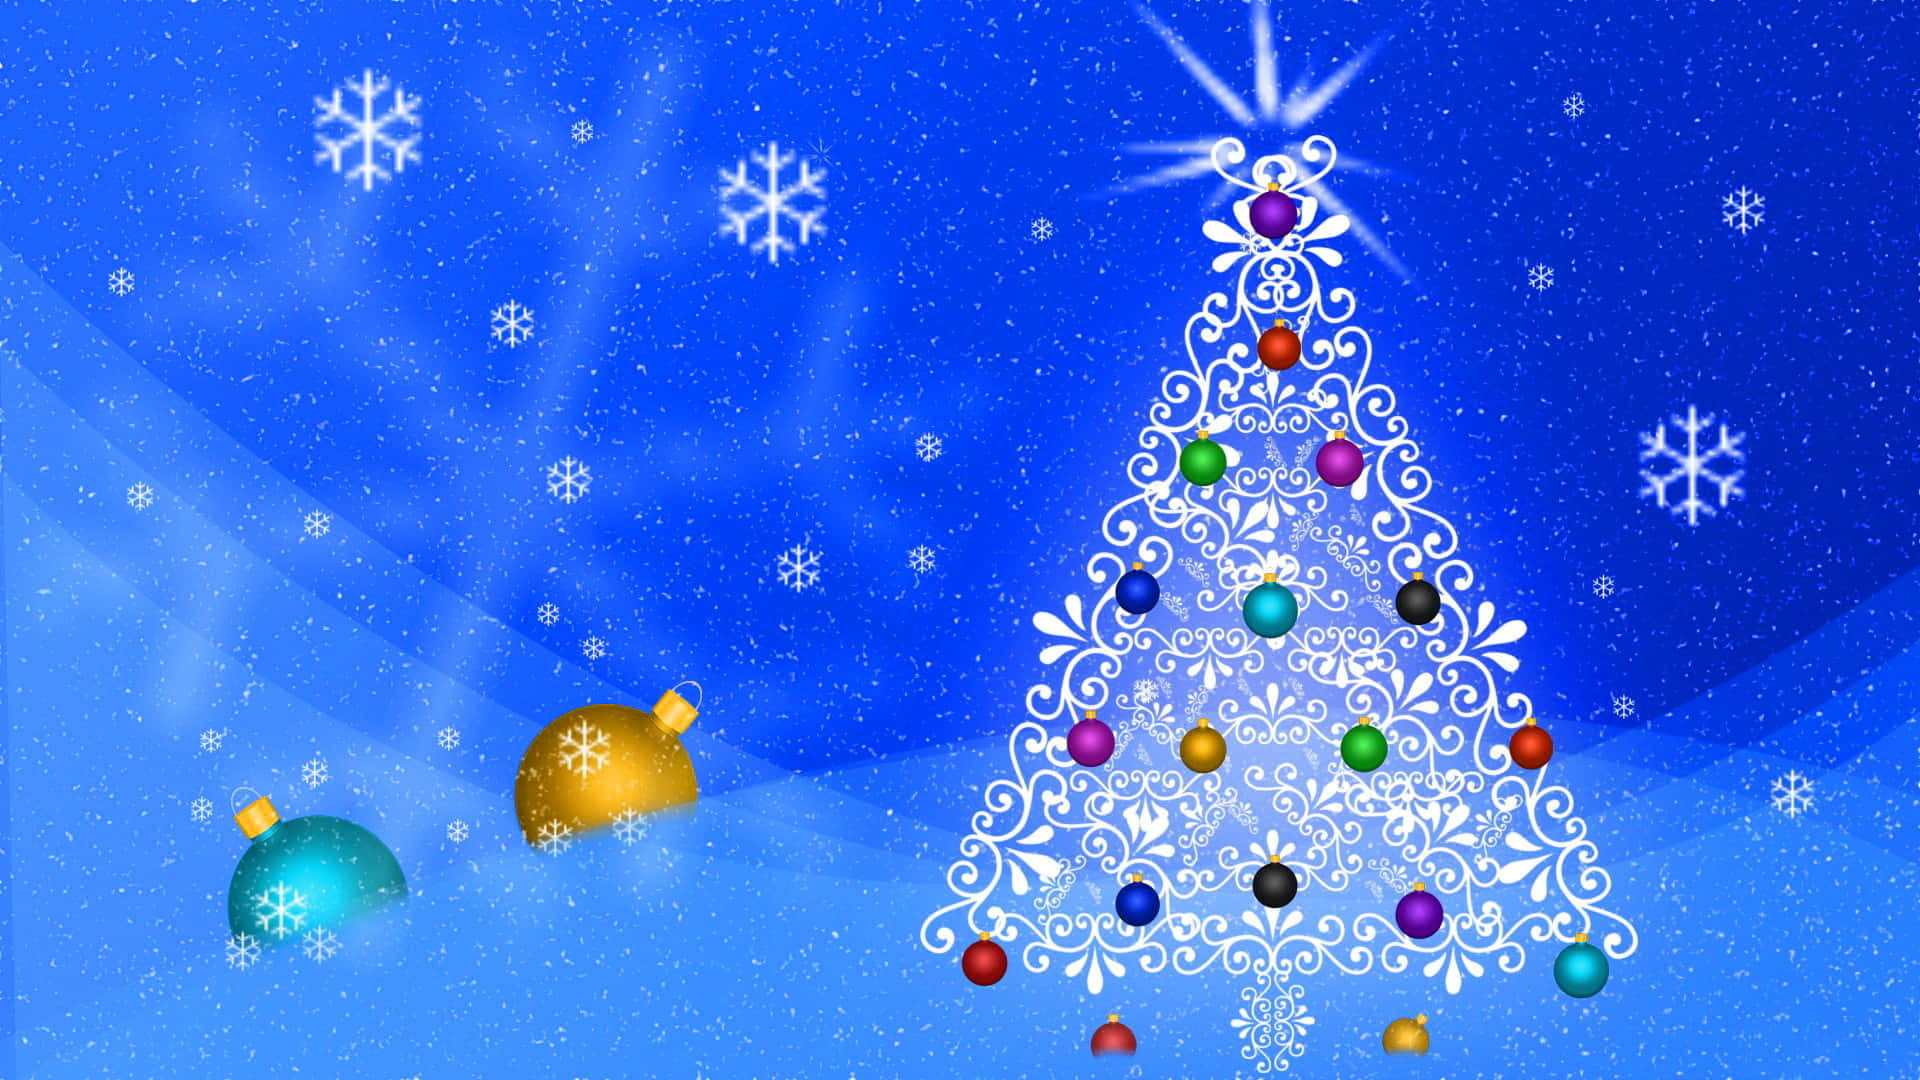 Download Festive 3D Christmas Scene Wallpaper | Wallpapers.com